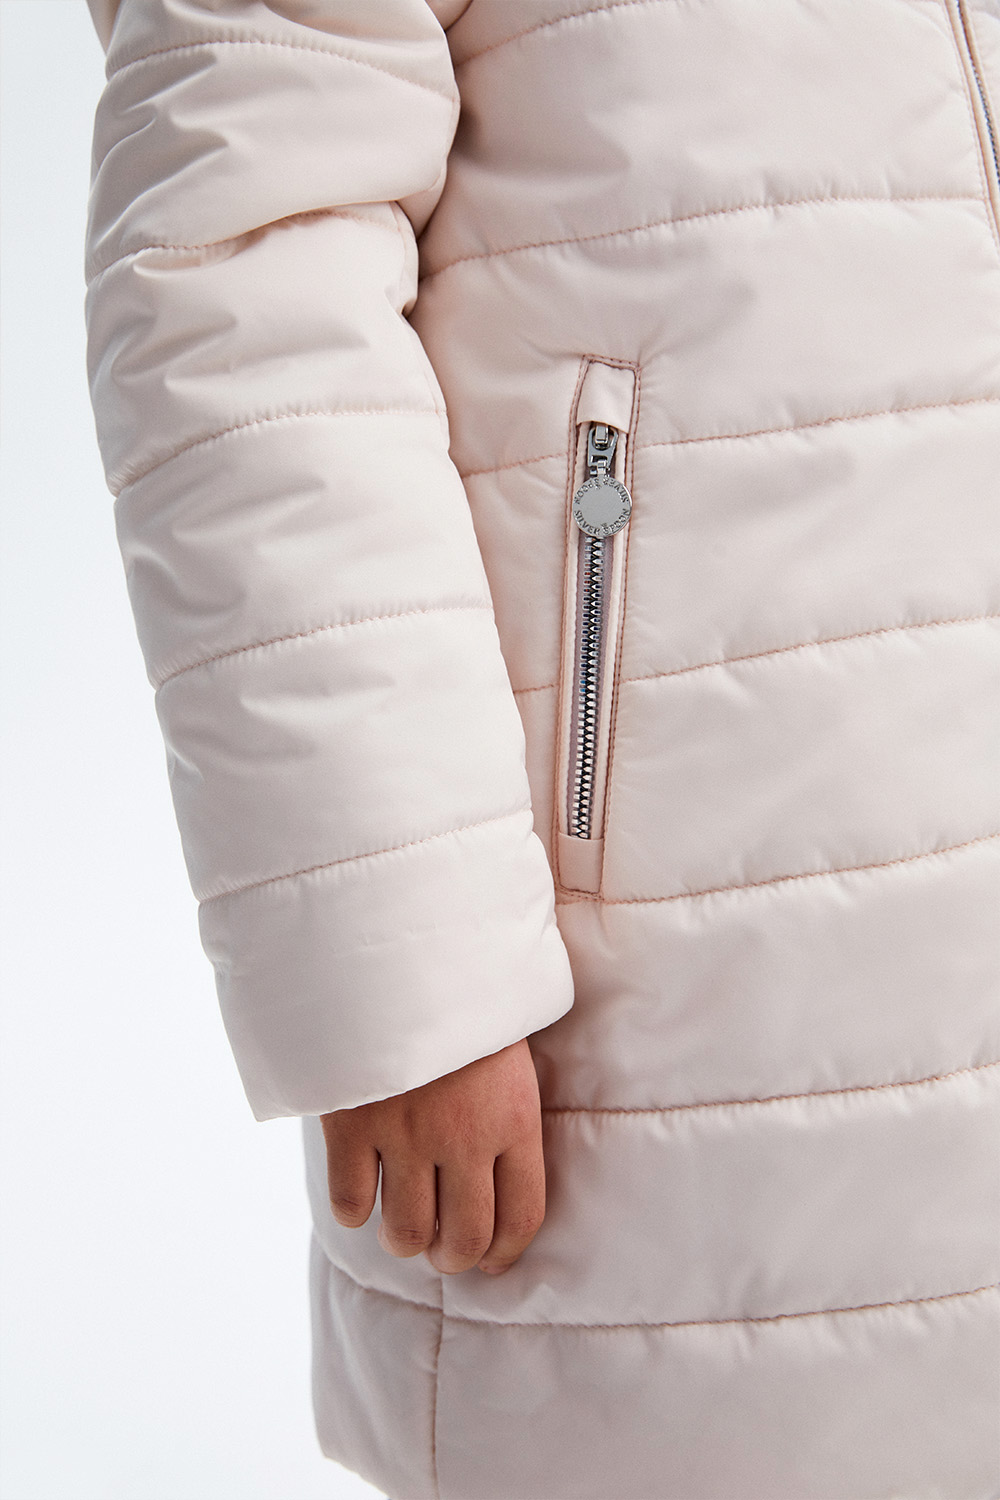 Утепленное пальто с капюшоном (SULWG-326-20310-401) Silver Spoon